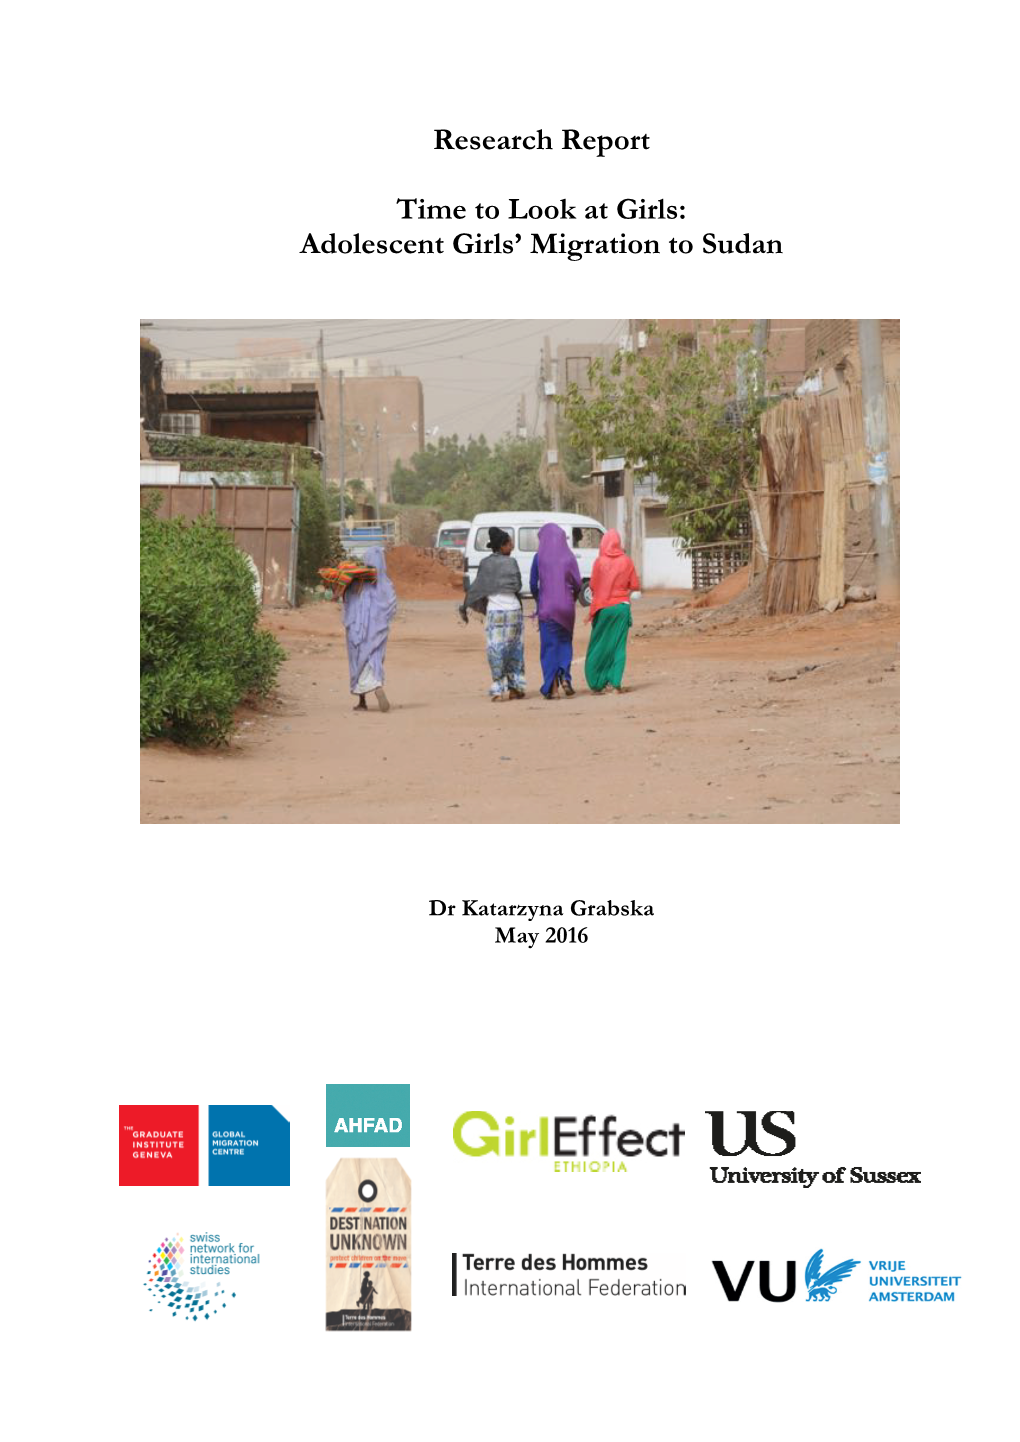 Adolescent Girls' Migration to Sudan